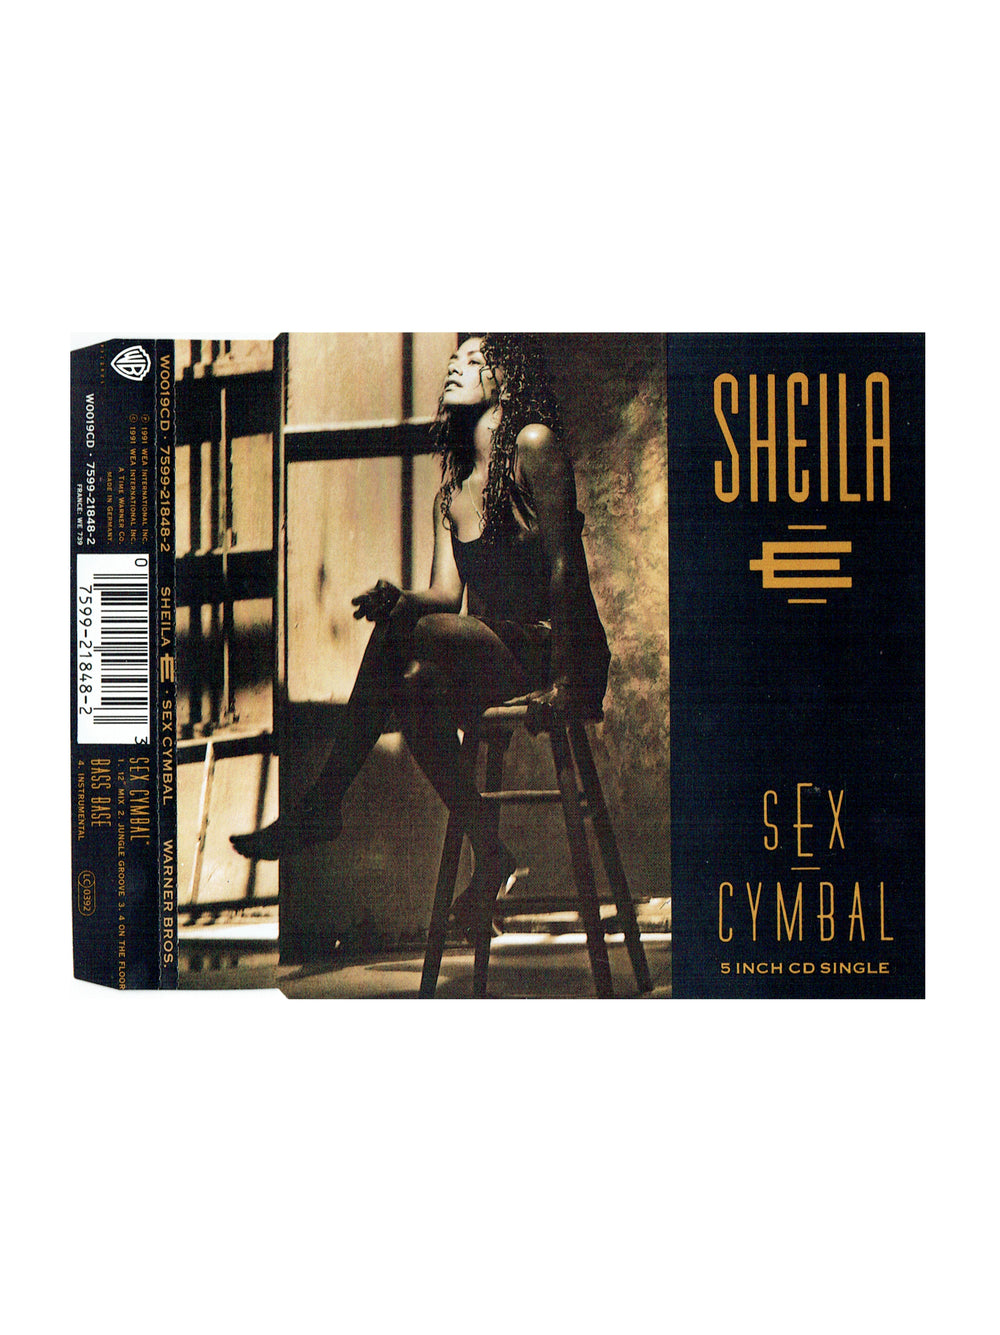 Sheila E Sex Cymbal Mix Uk Cd Single 1991 4 Tracks Prince Rockitpoole